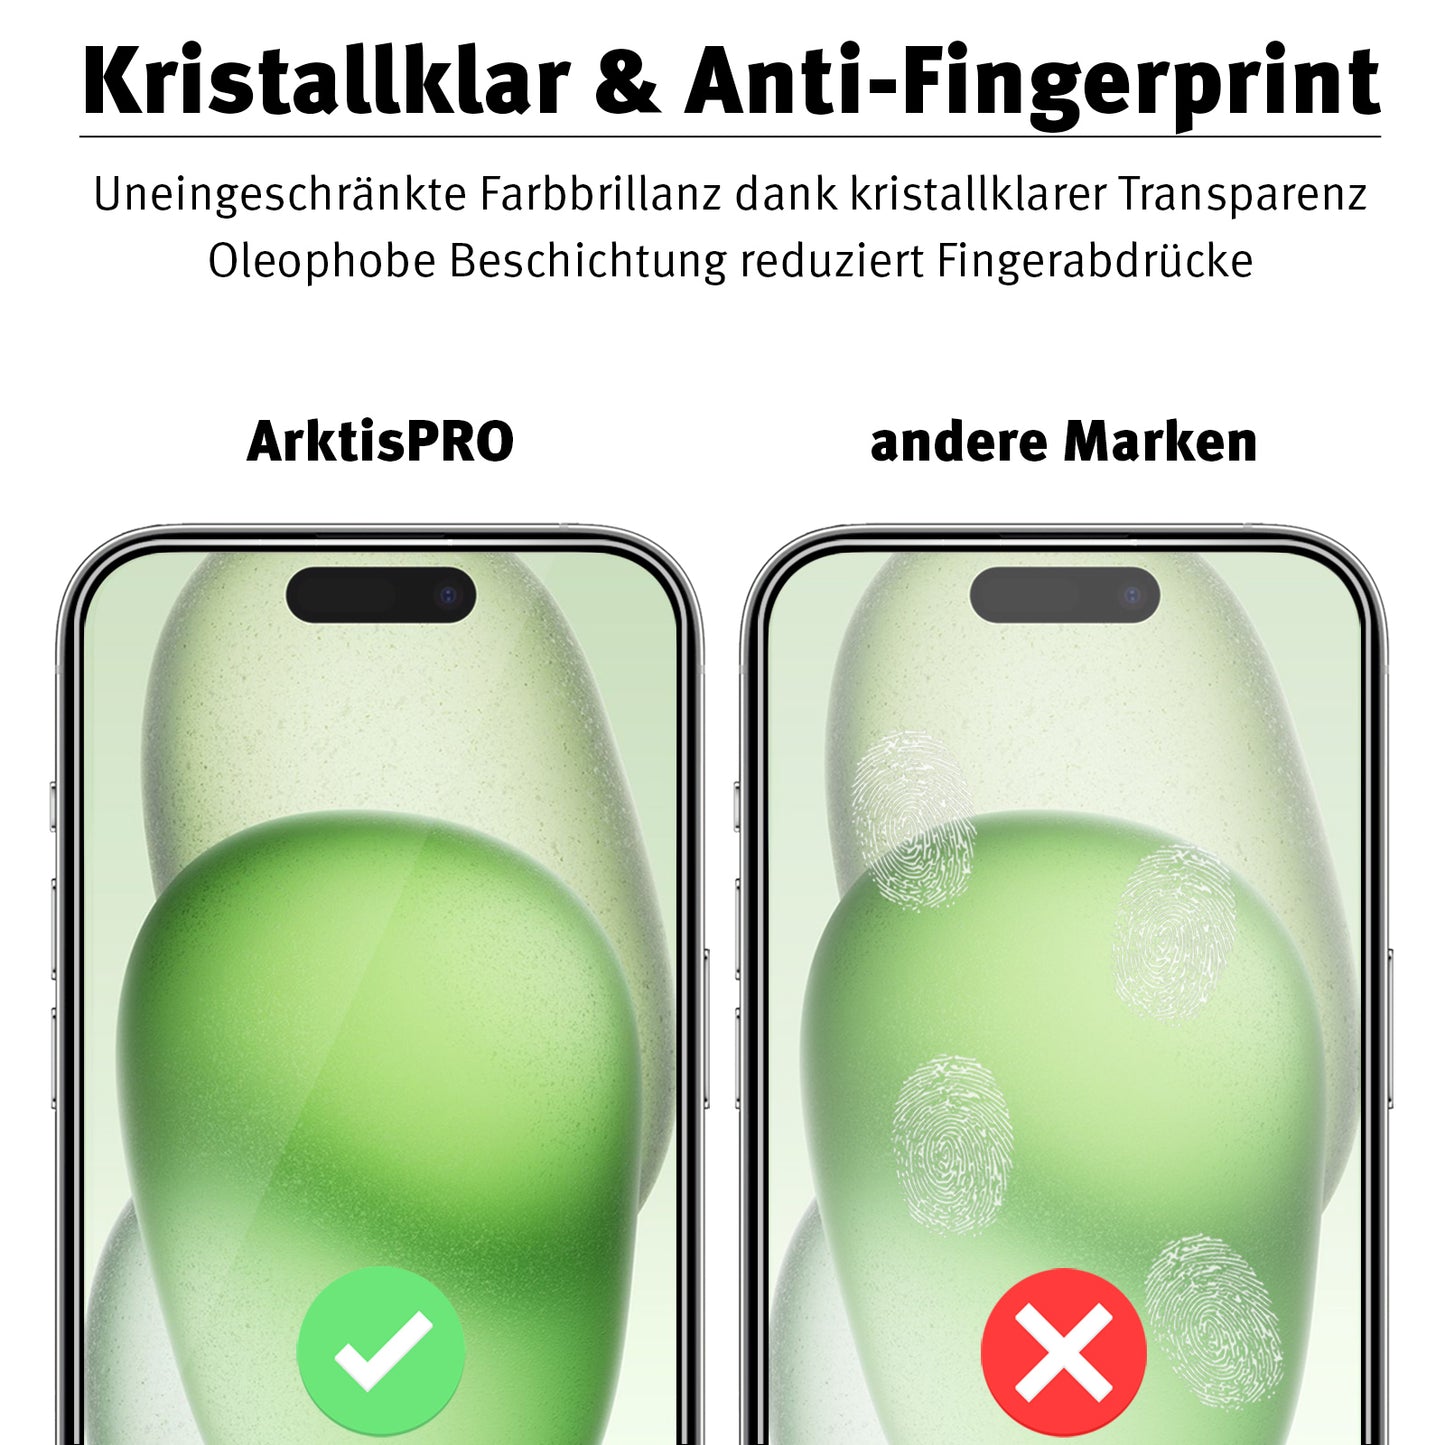 ArktisPRO iPhone 15 Plus Displayschutz GLAS - 3er Set